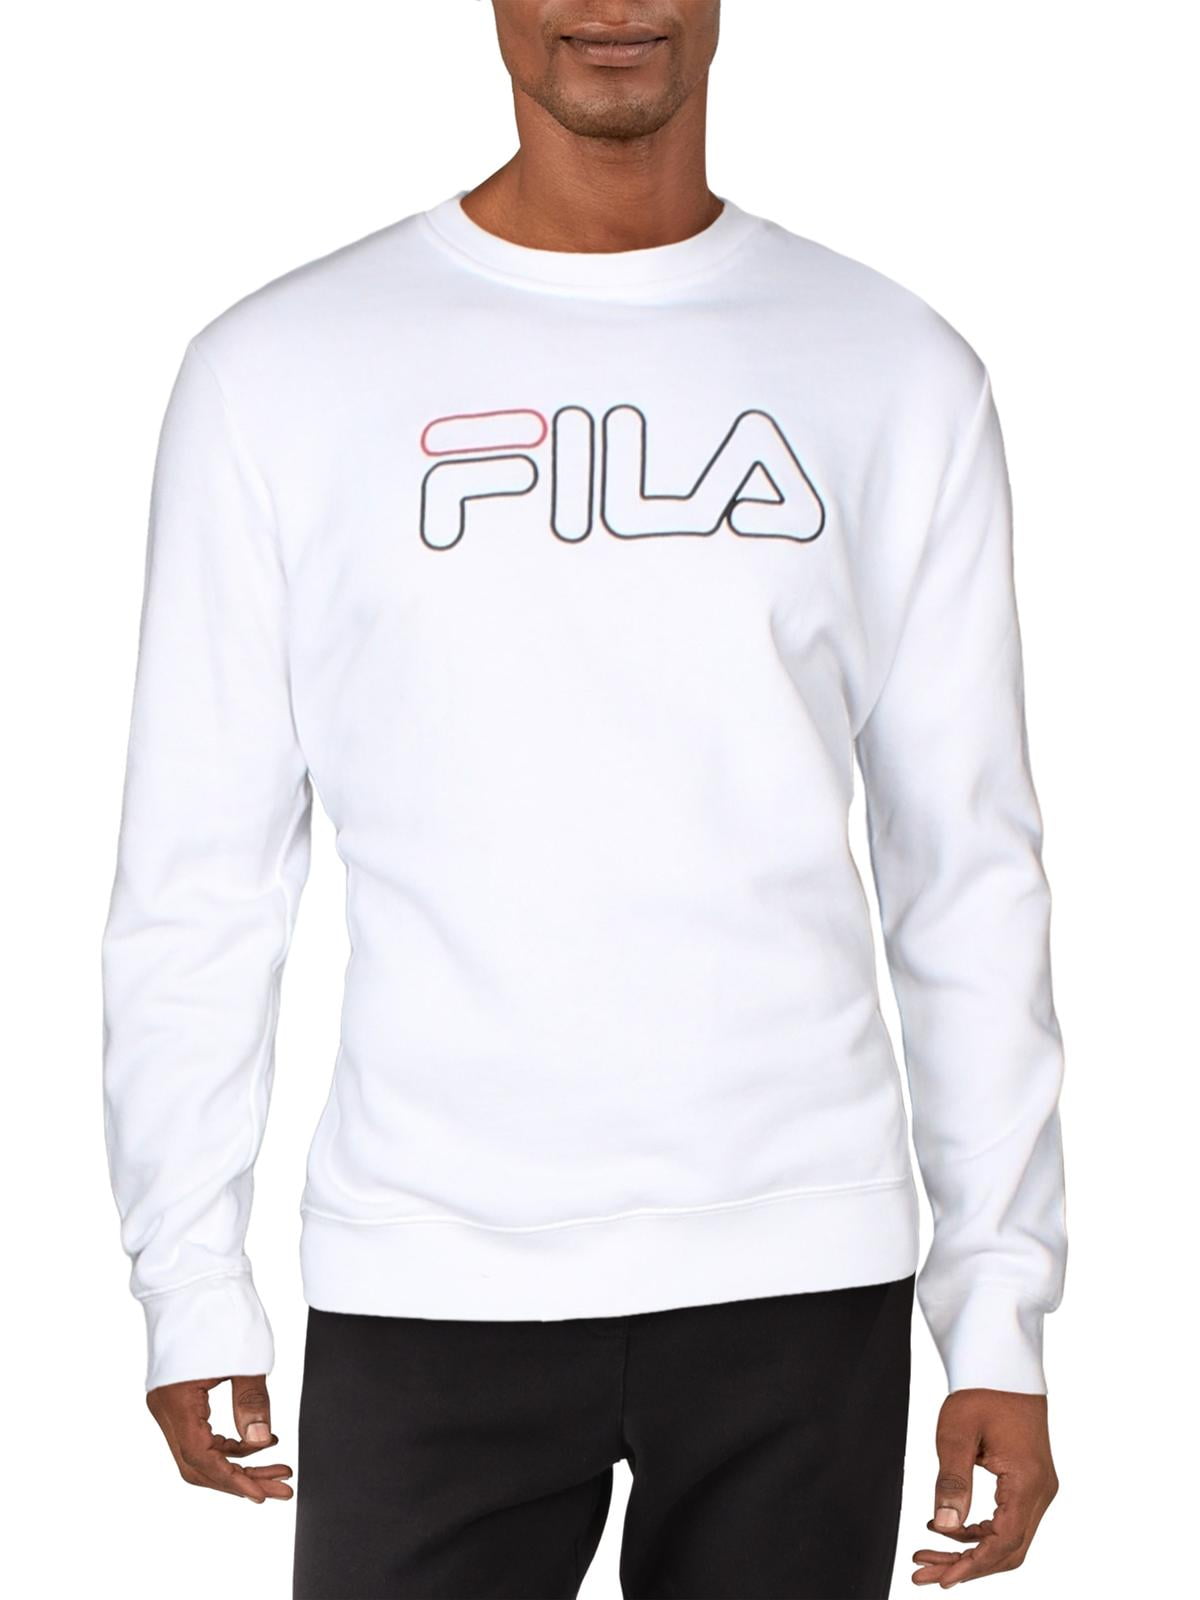 FILA - Fila Harlem Fitness Activewear Sweatshirt White XL - Walmart.com Walmart.com